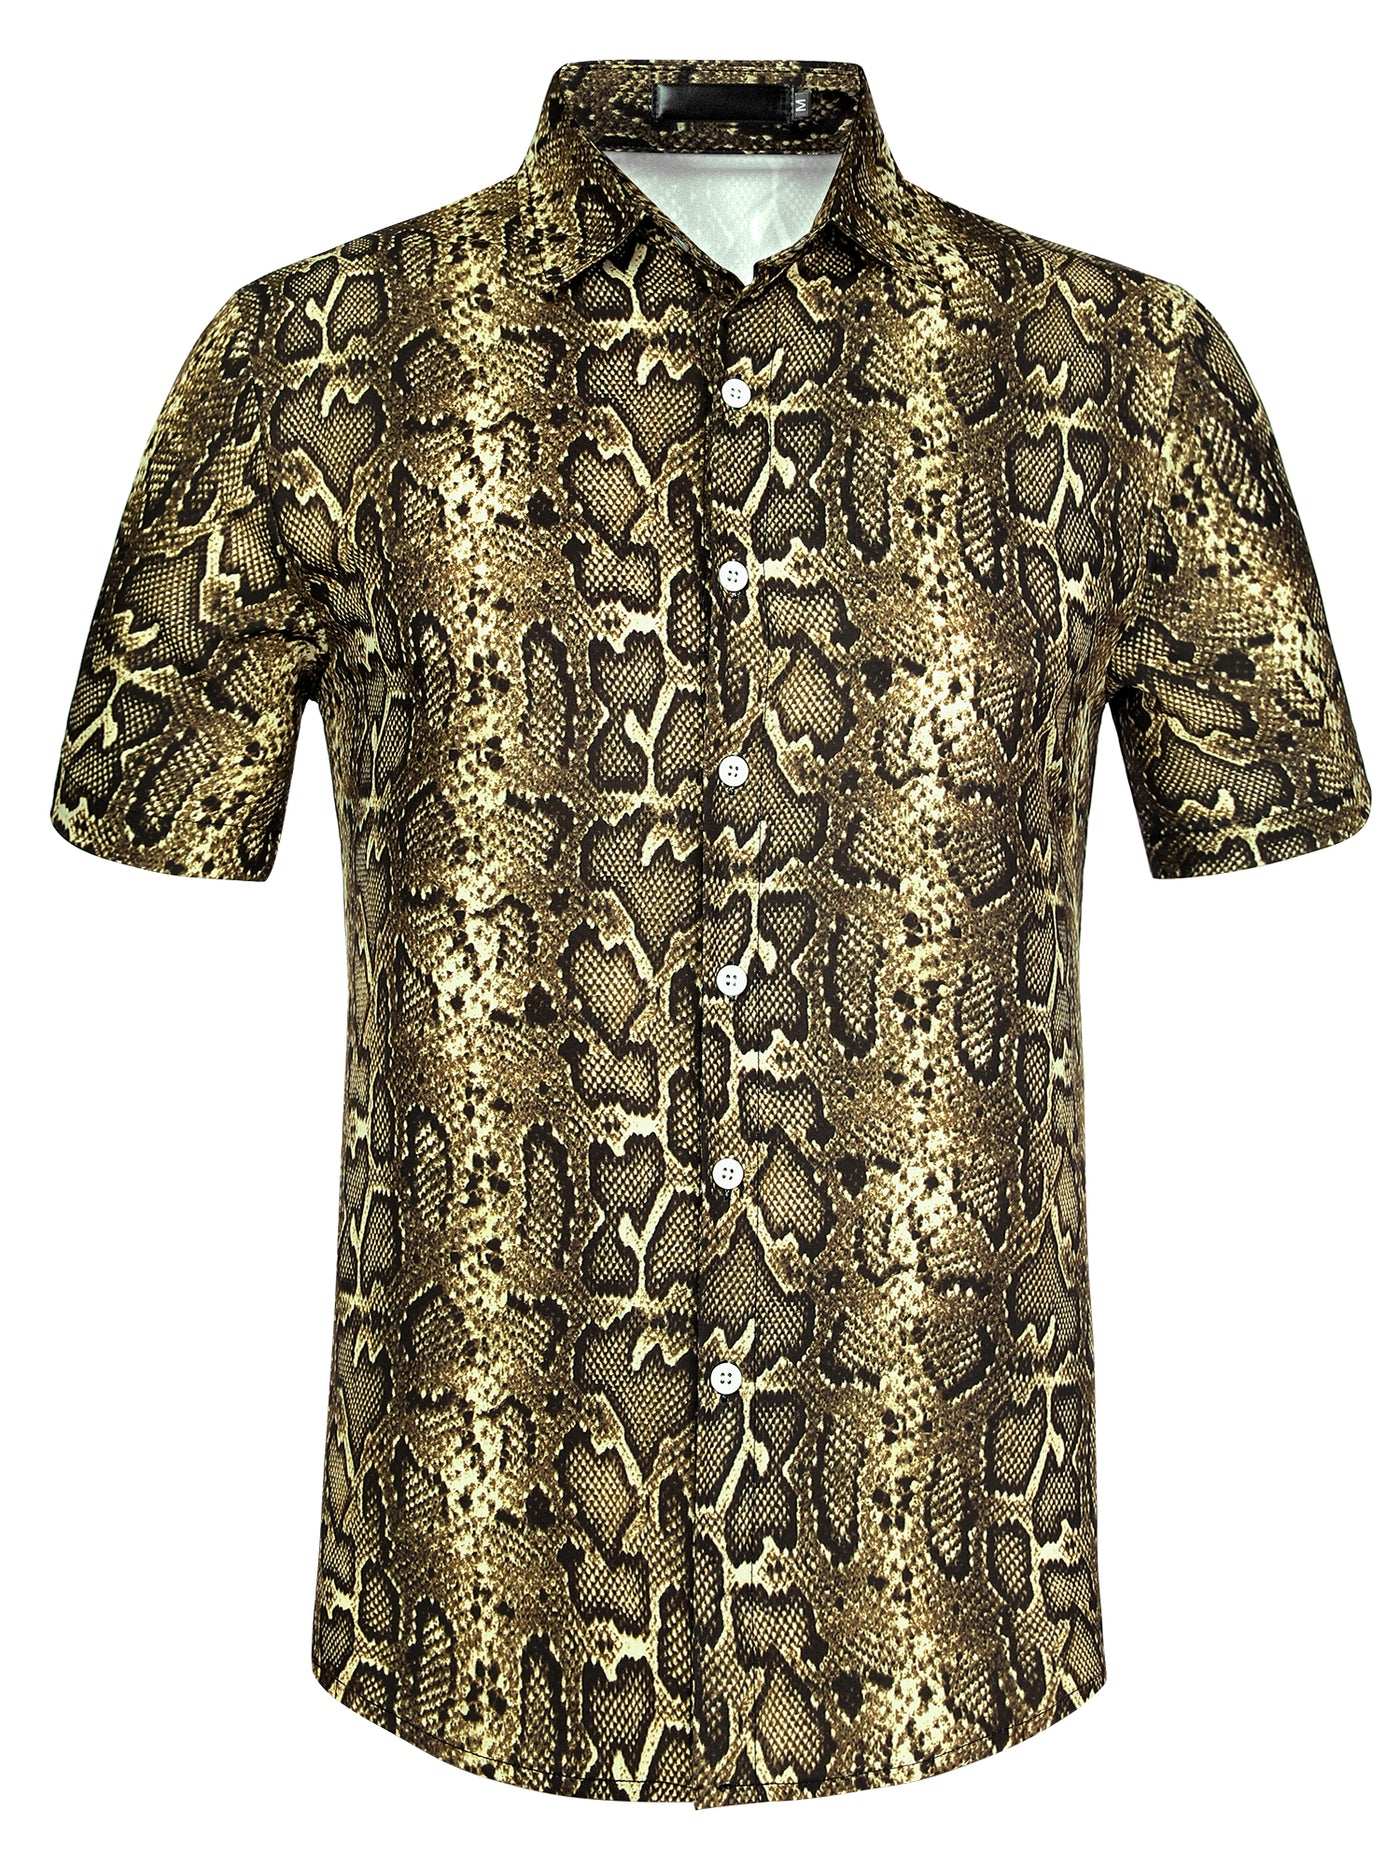 Bublédon Casual Summer Leopard Print Short Sleeve Shirts